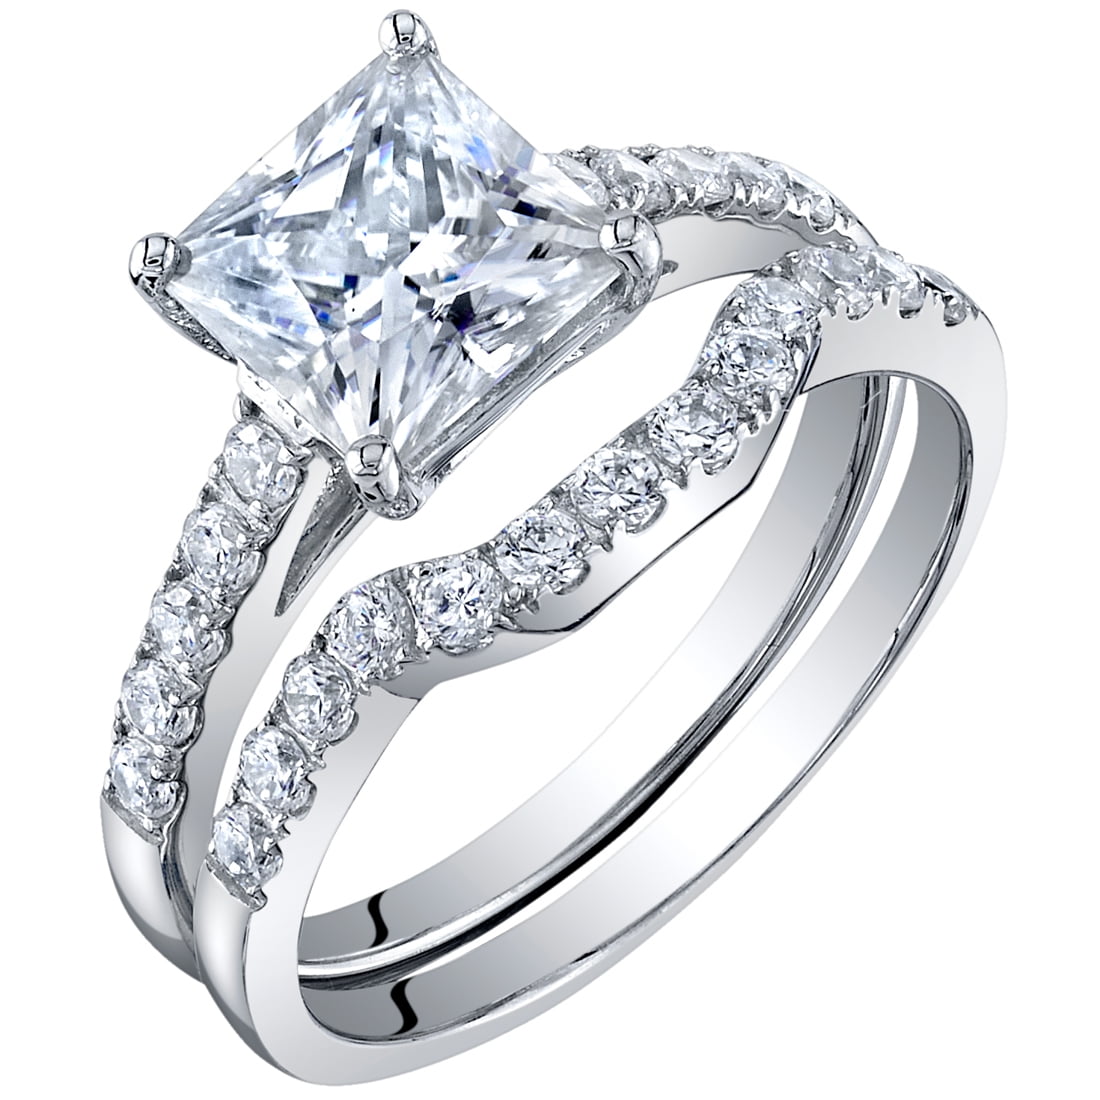 2Ct Princess Cut White Diamond Engagement Wedding Ring Set 925 Sterling Silver 